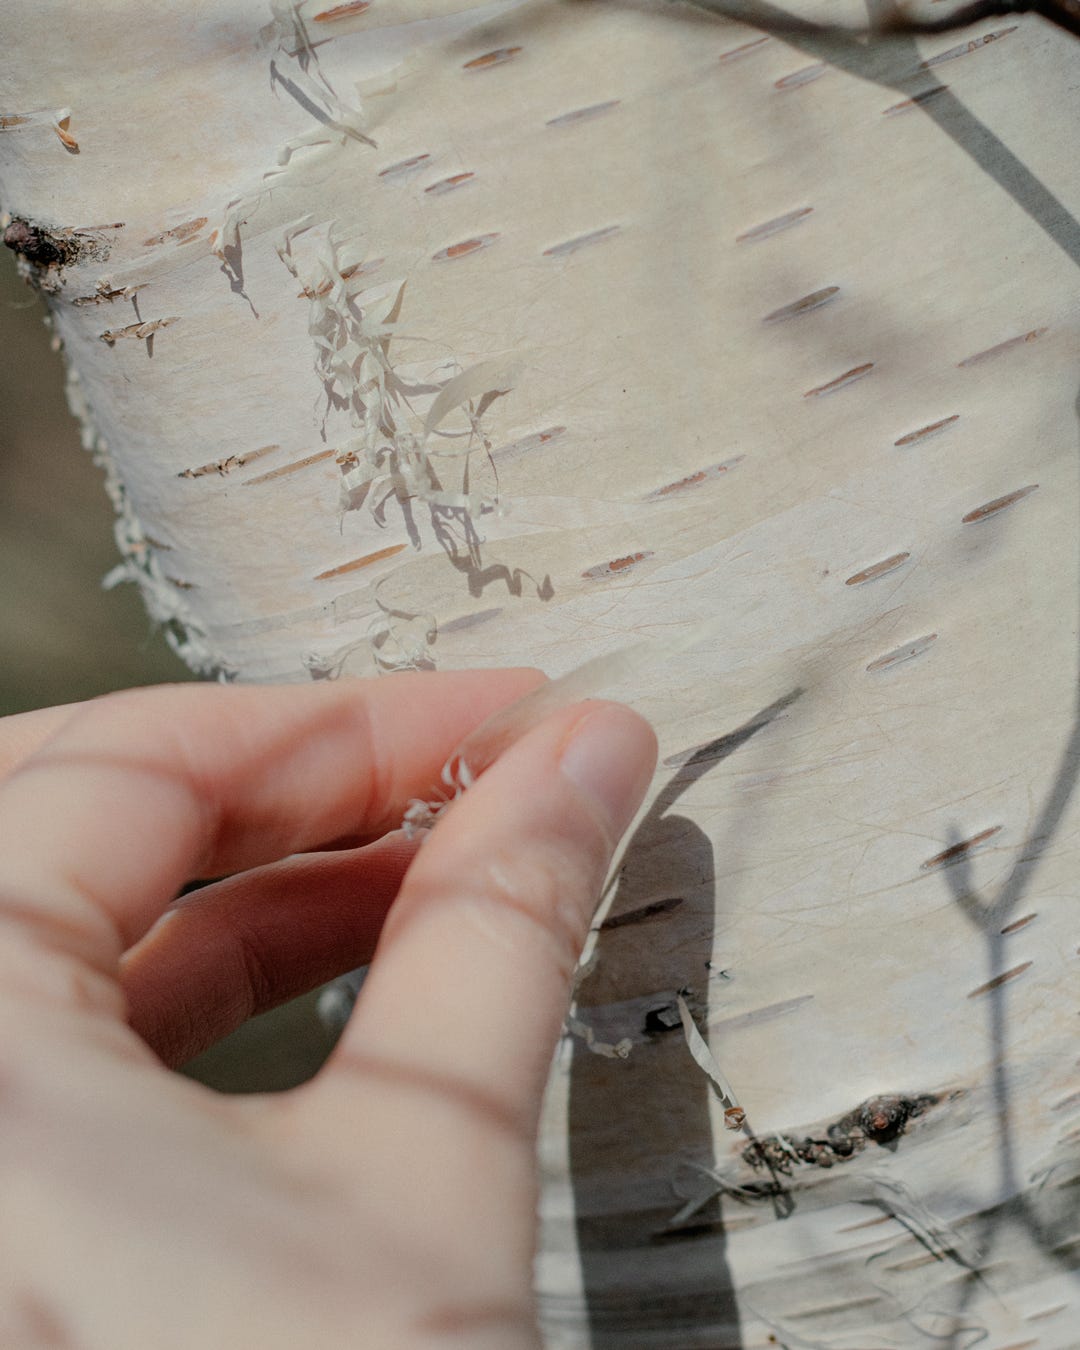 Birch tree shedding its bark